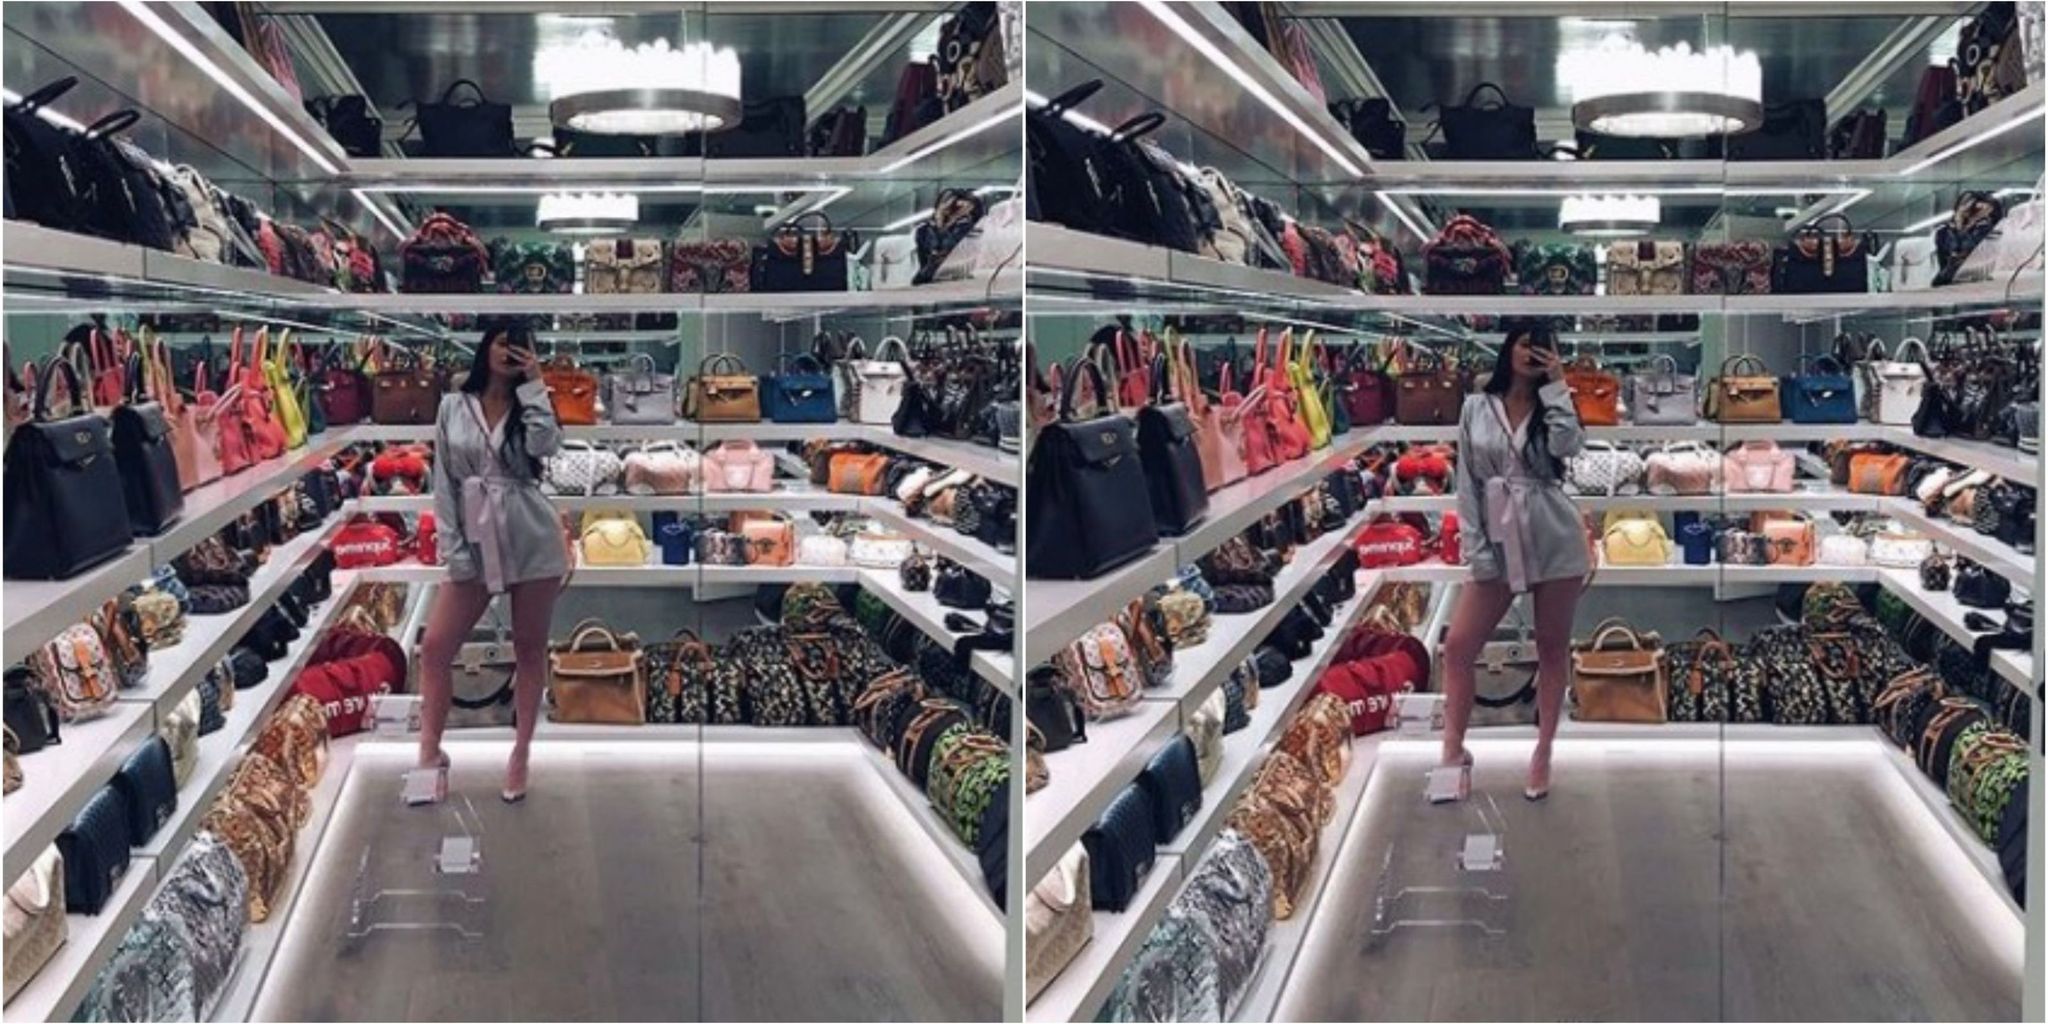 Kylie Jenner's bag closet